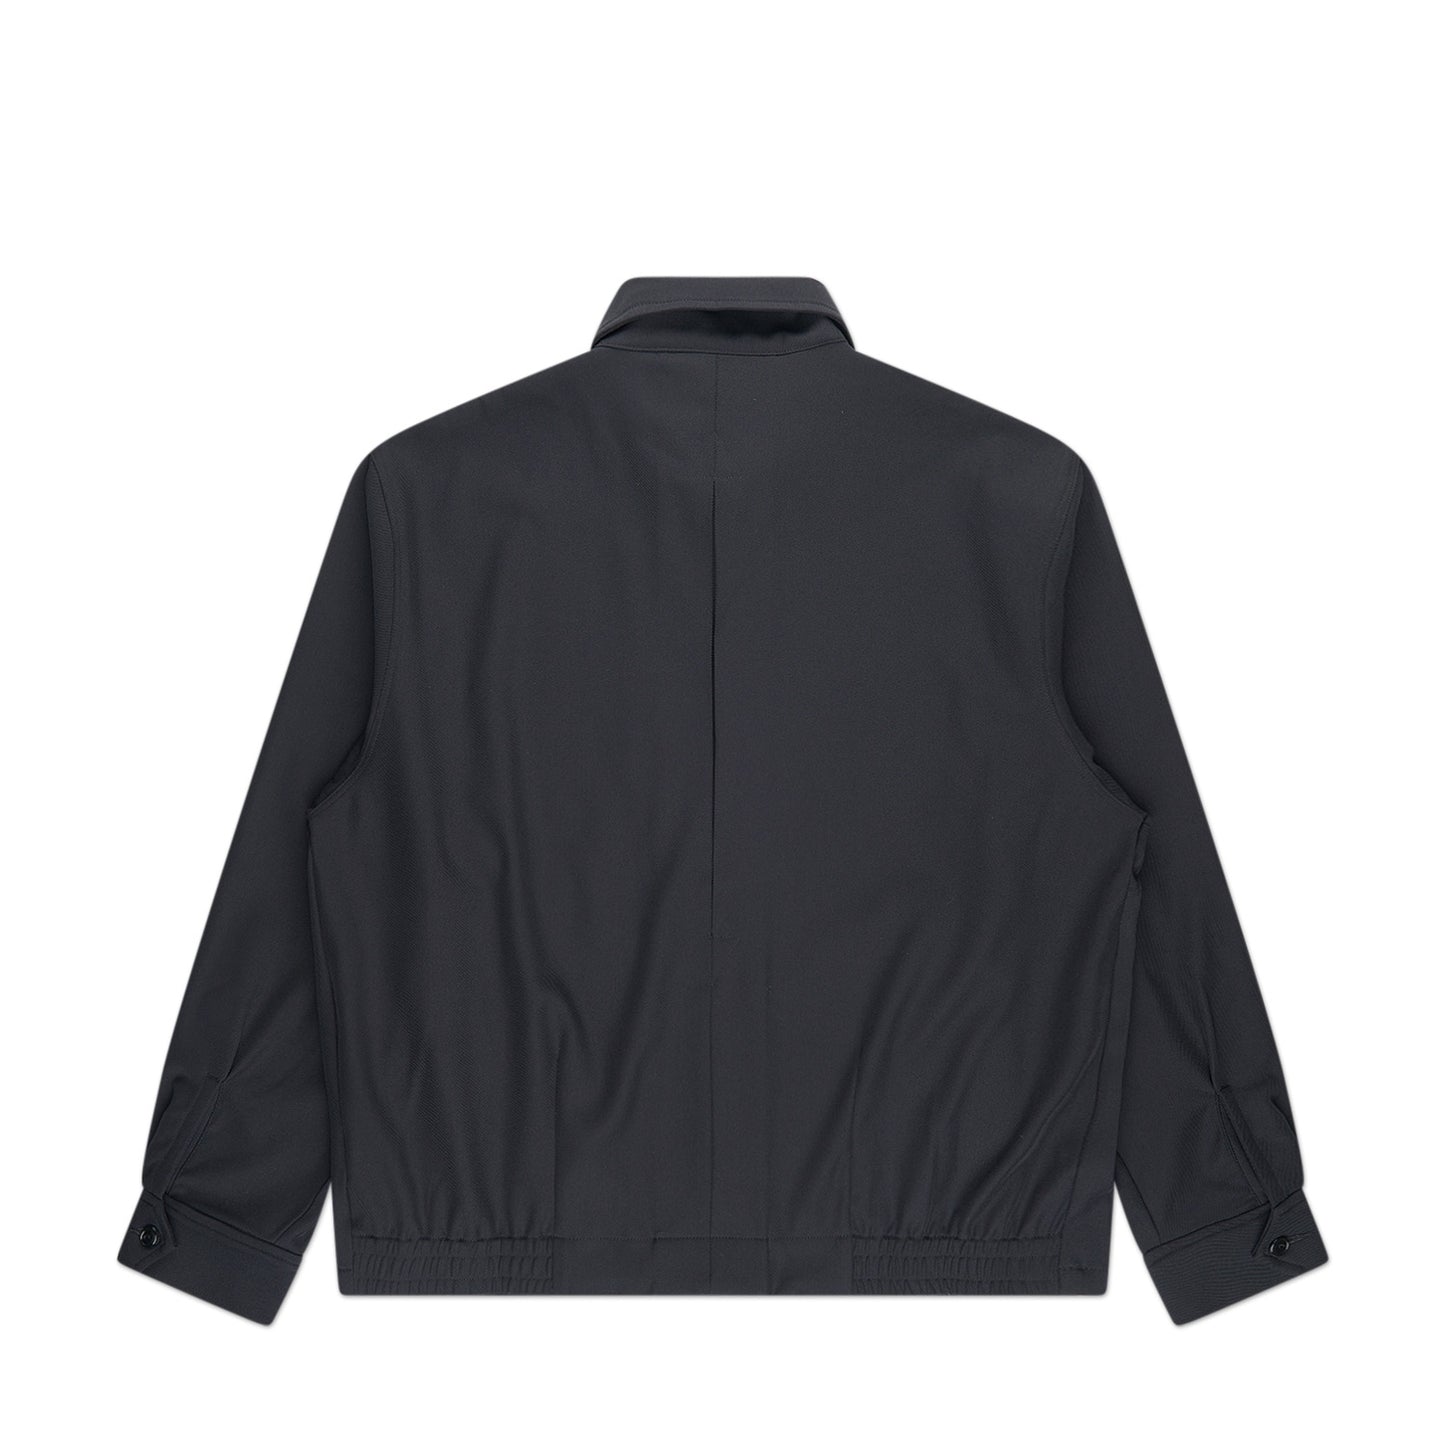 needles sport twill jacket (black)